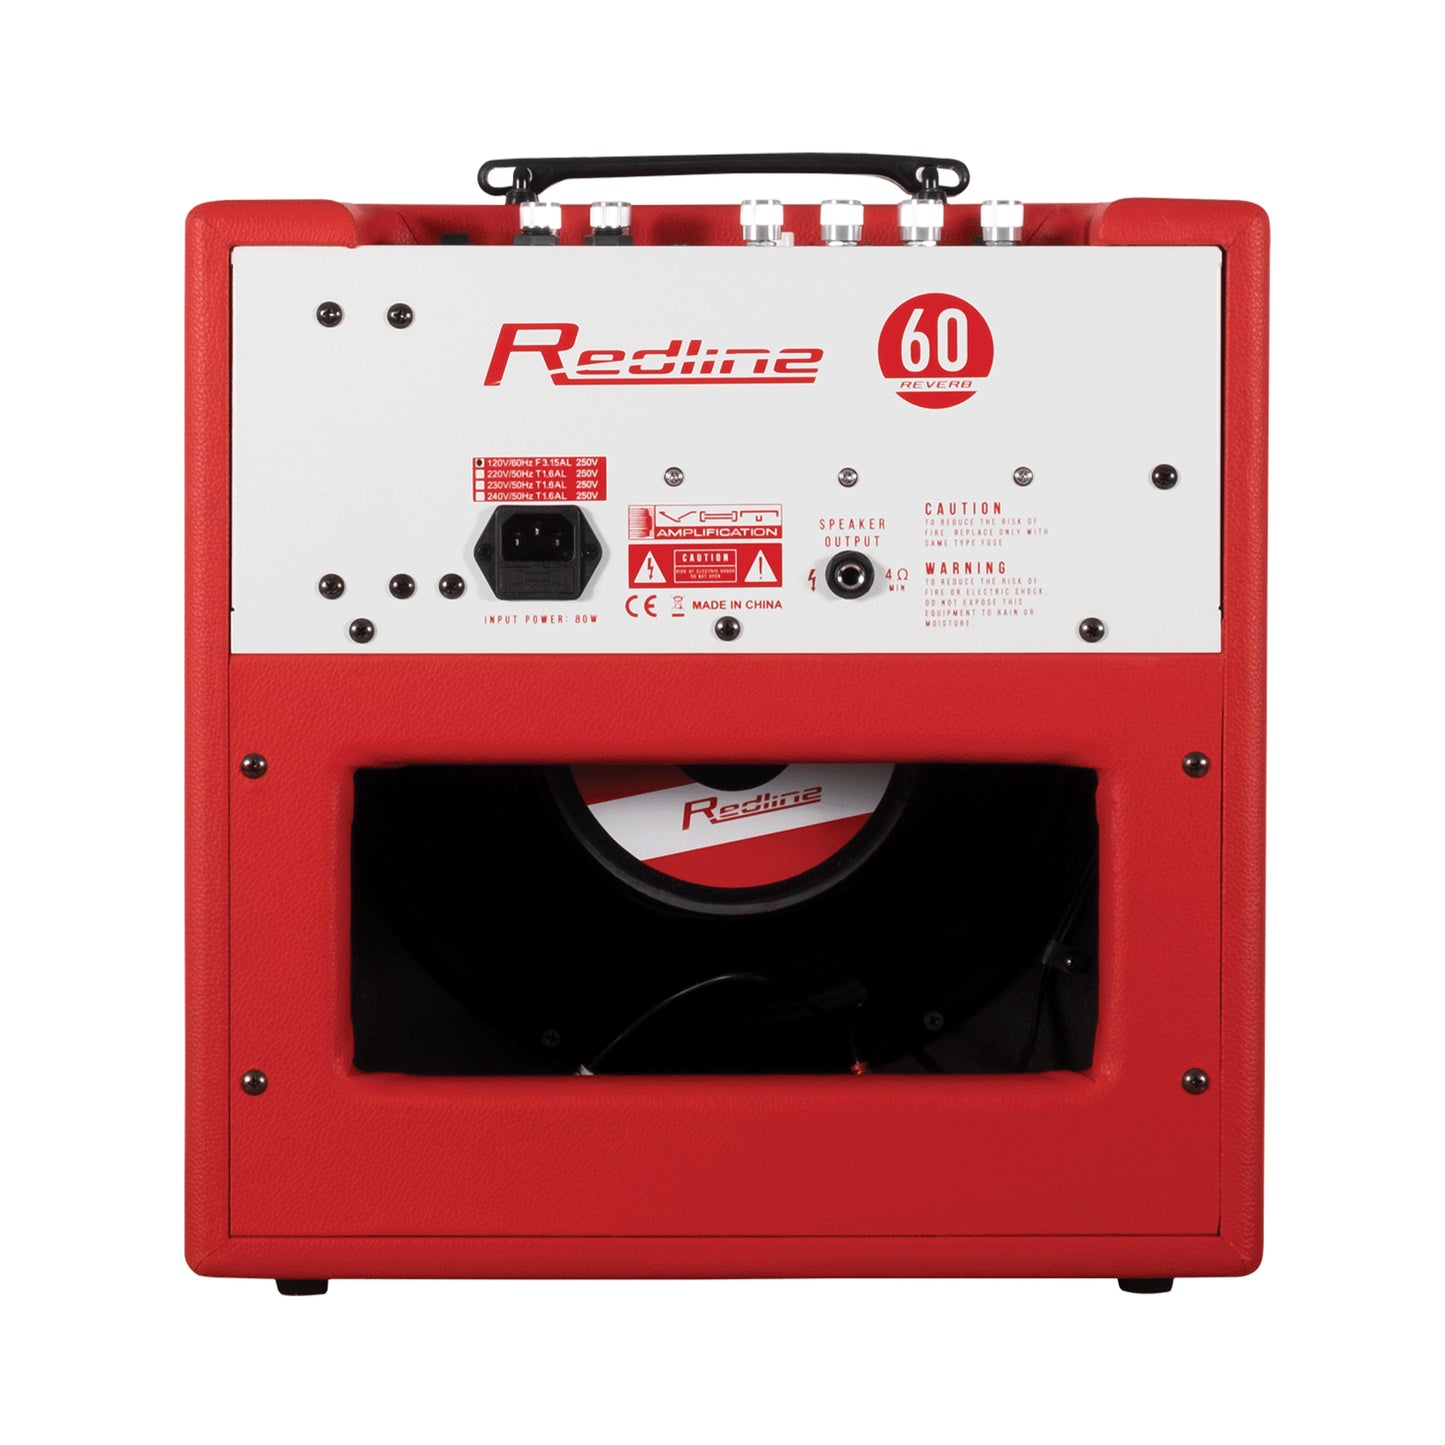 VHT Redline 60R Electric Guitar Combo Amplifier